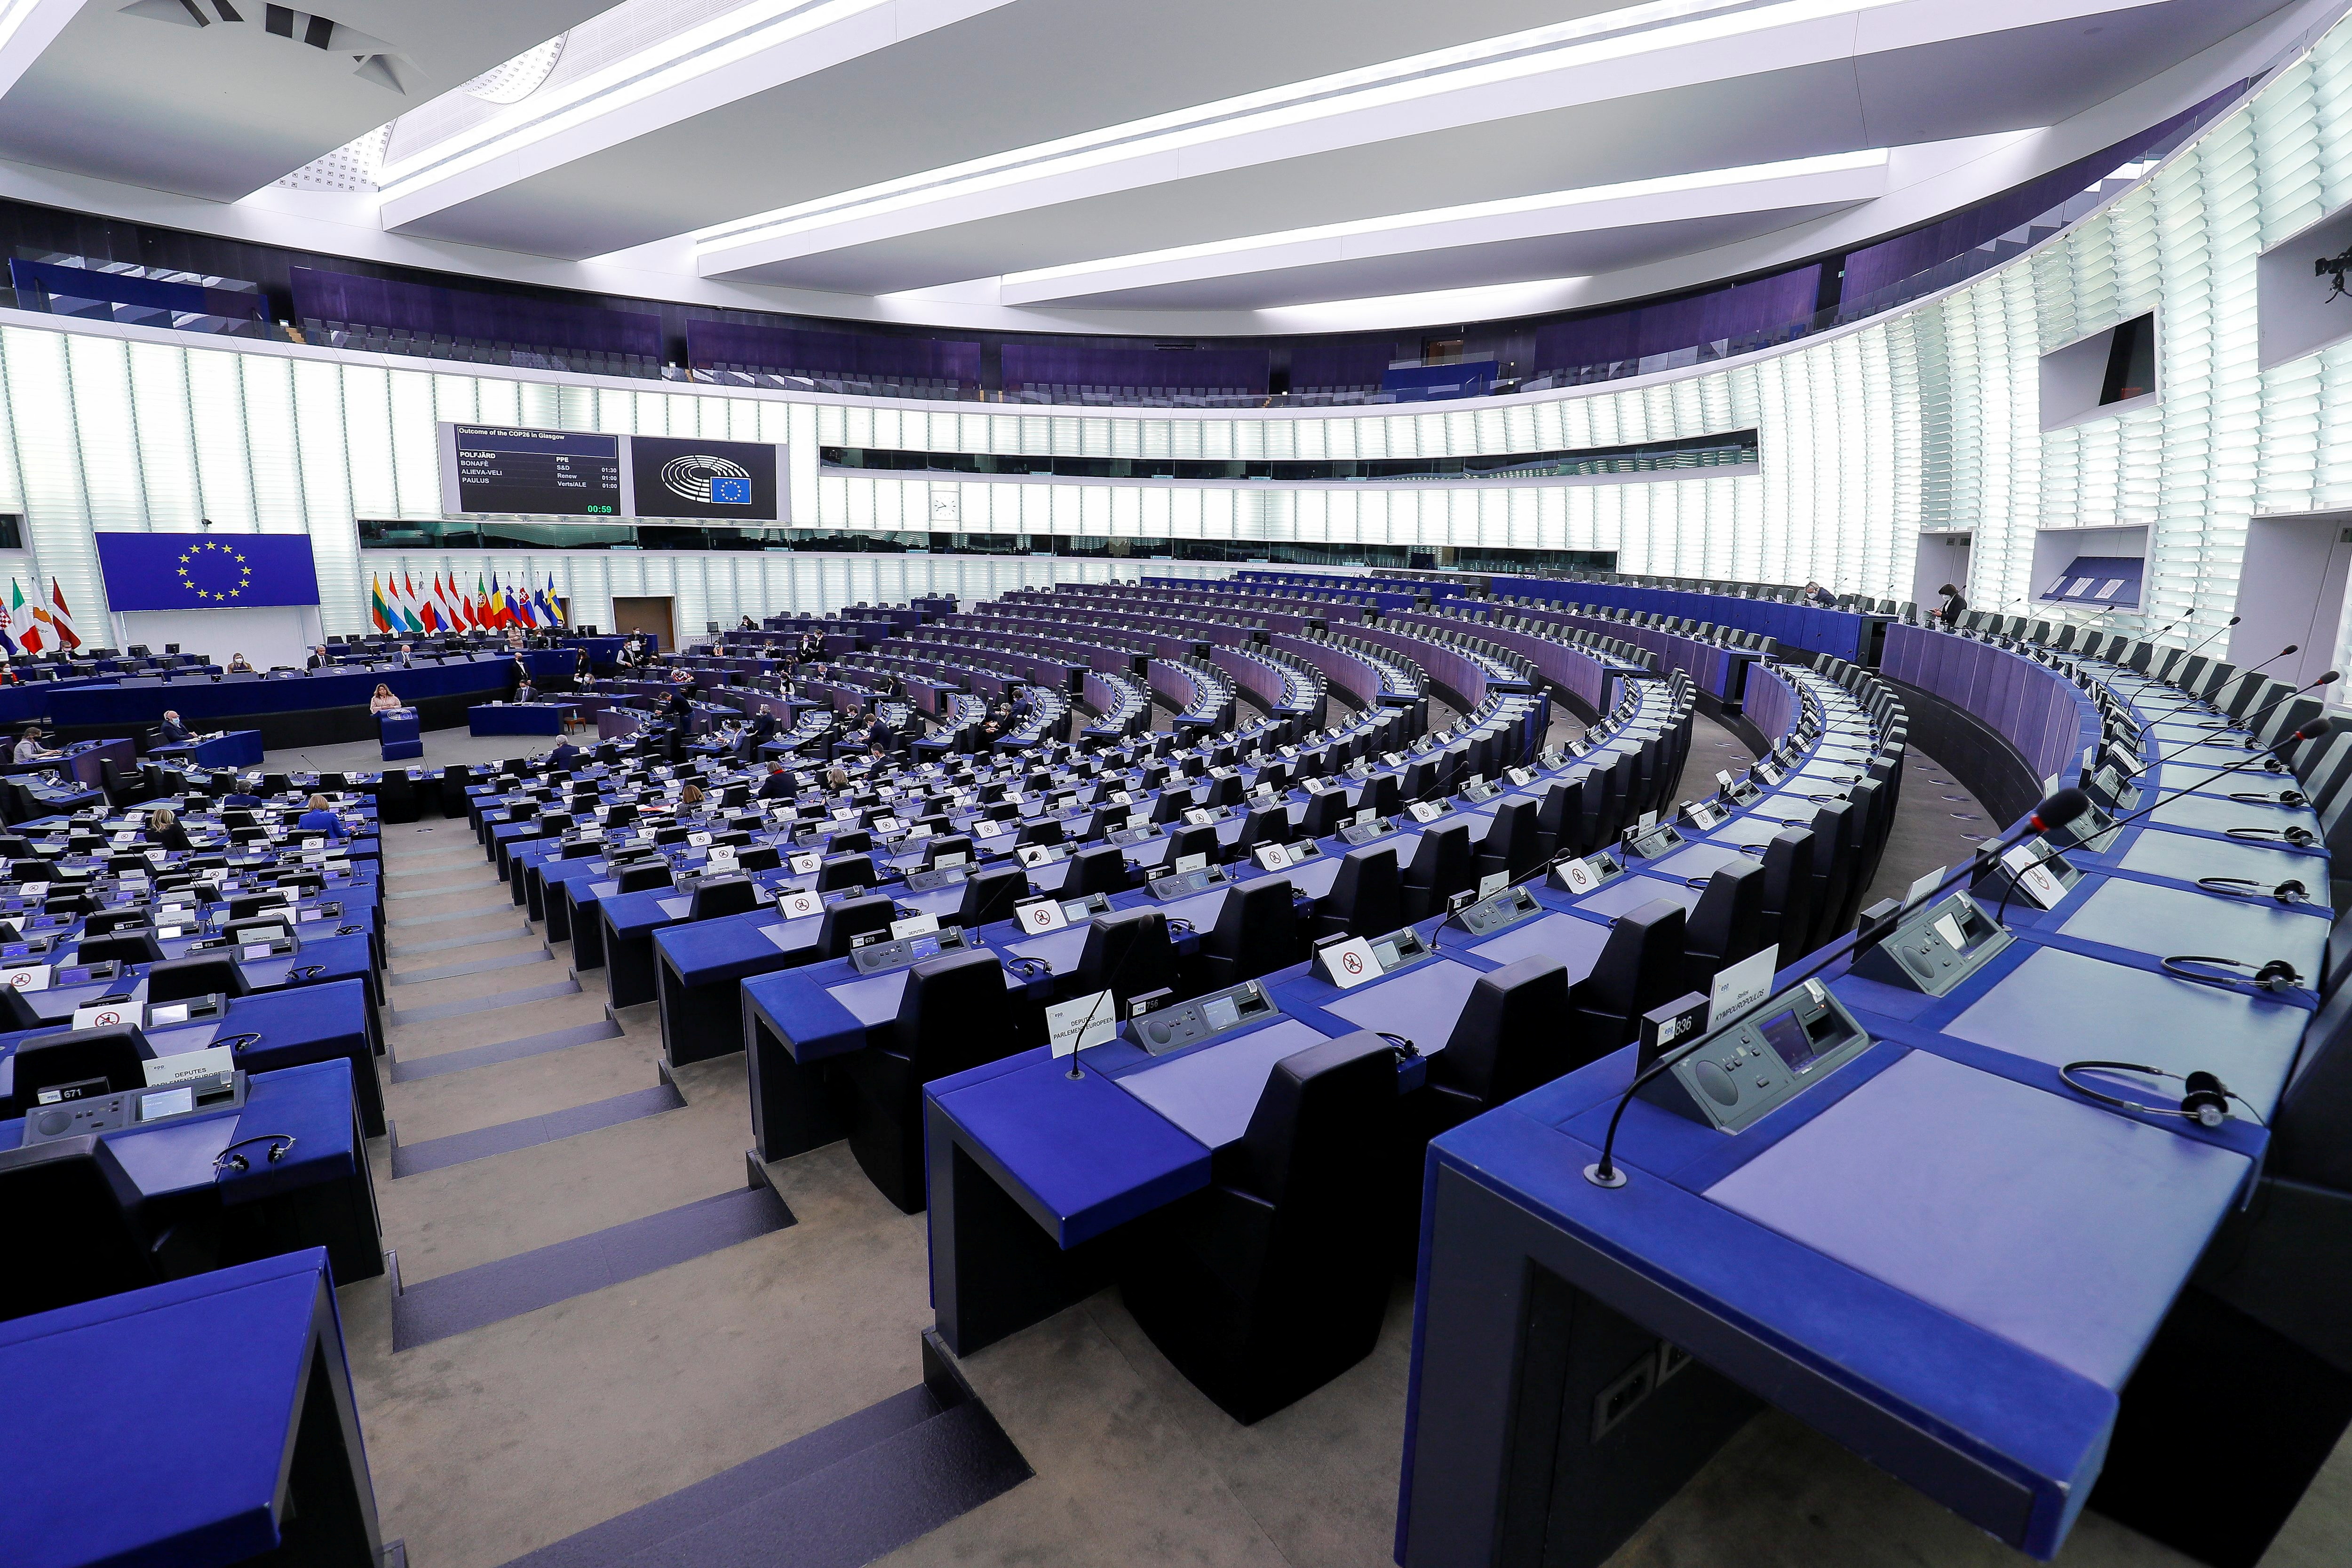 European Parliament plenary session in Strasbourg